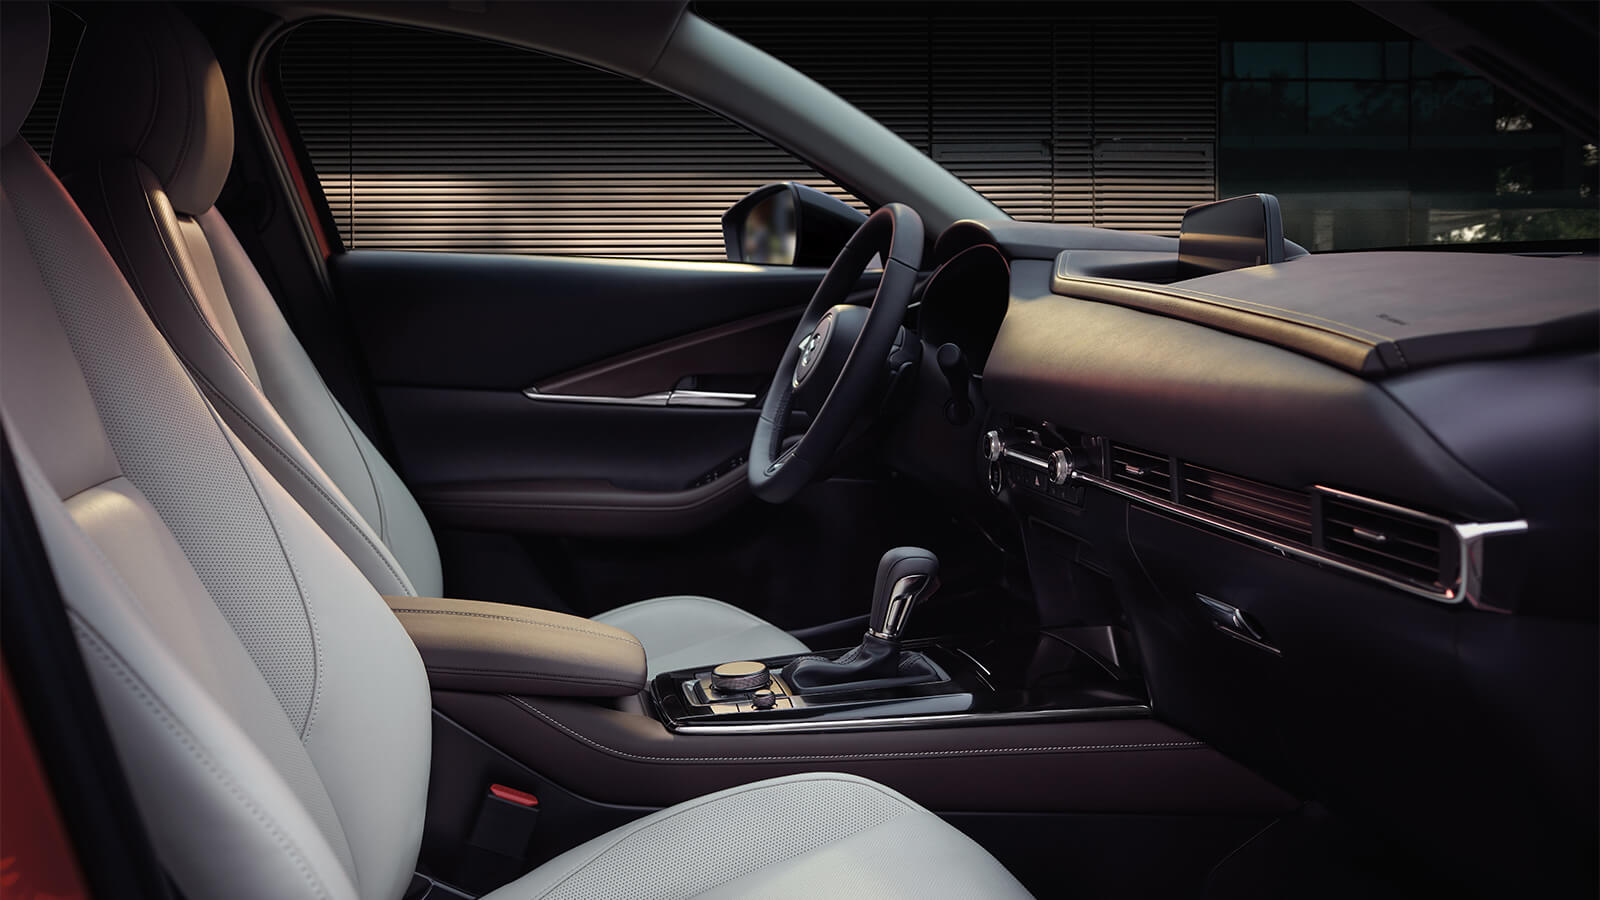 Mazda CX-30 interior with white leather seats.